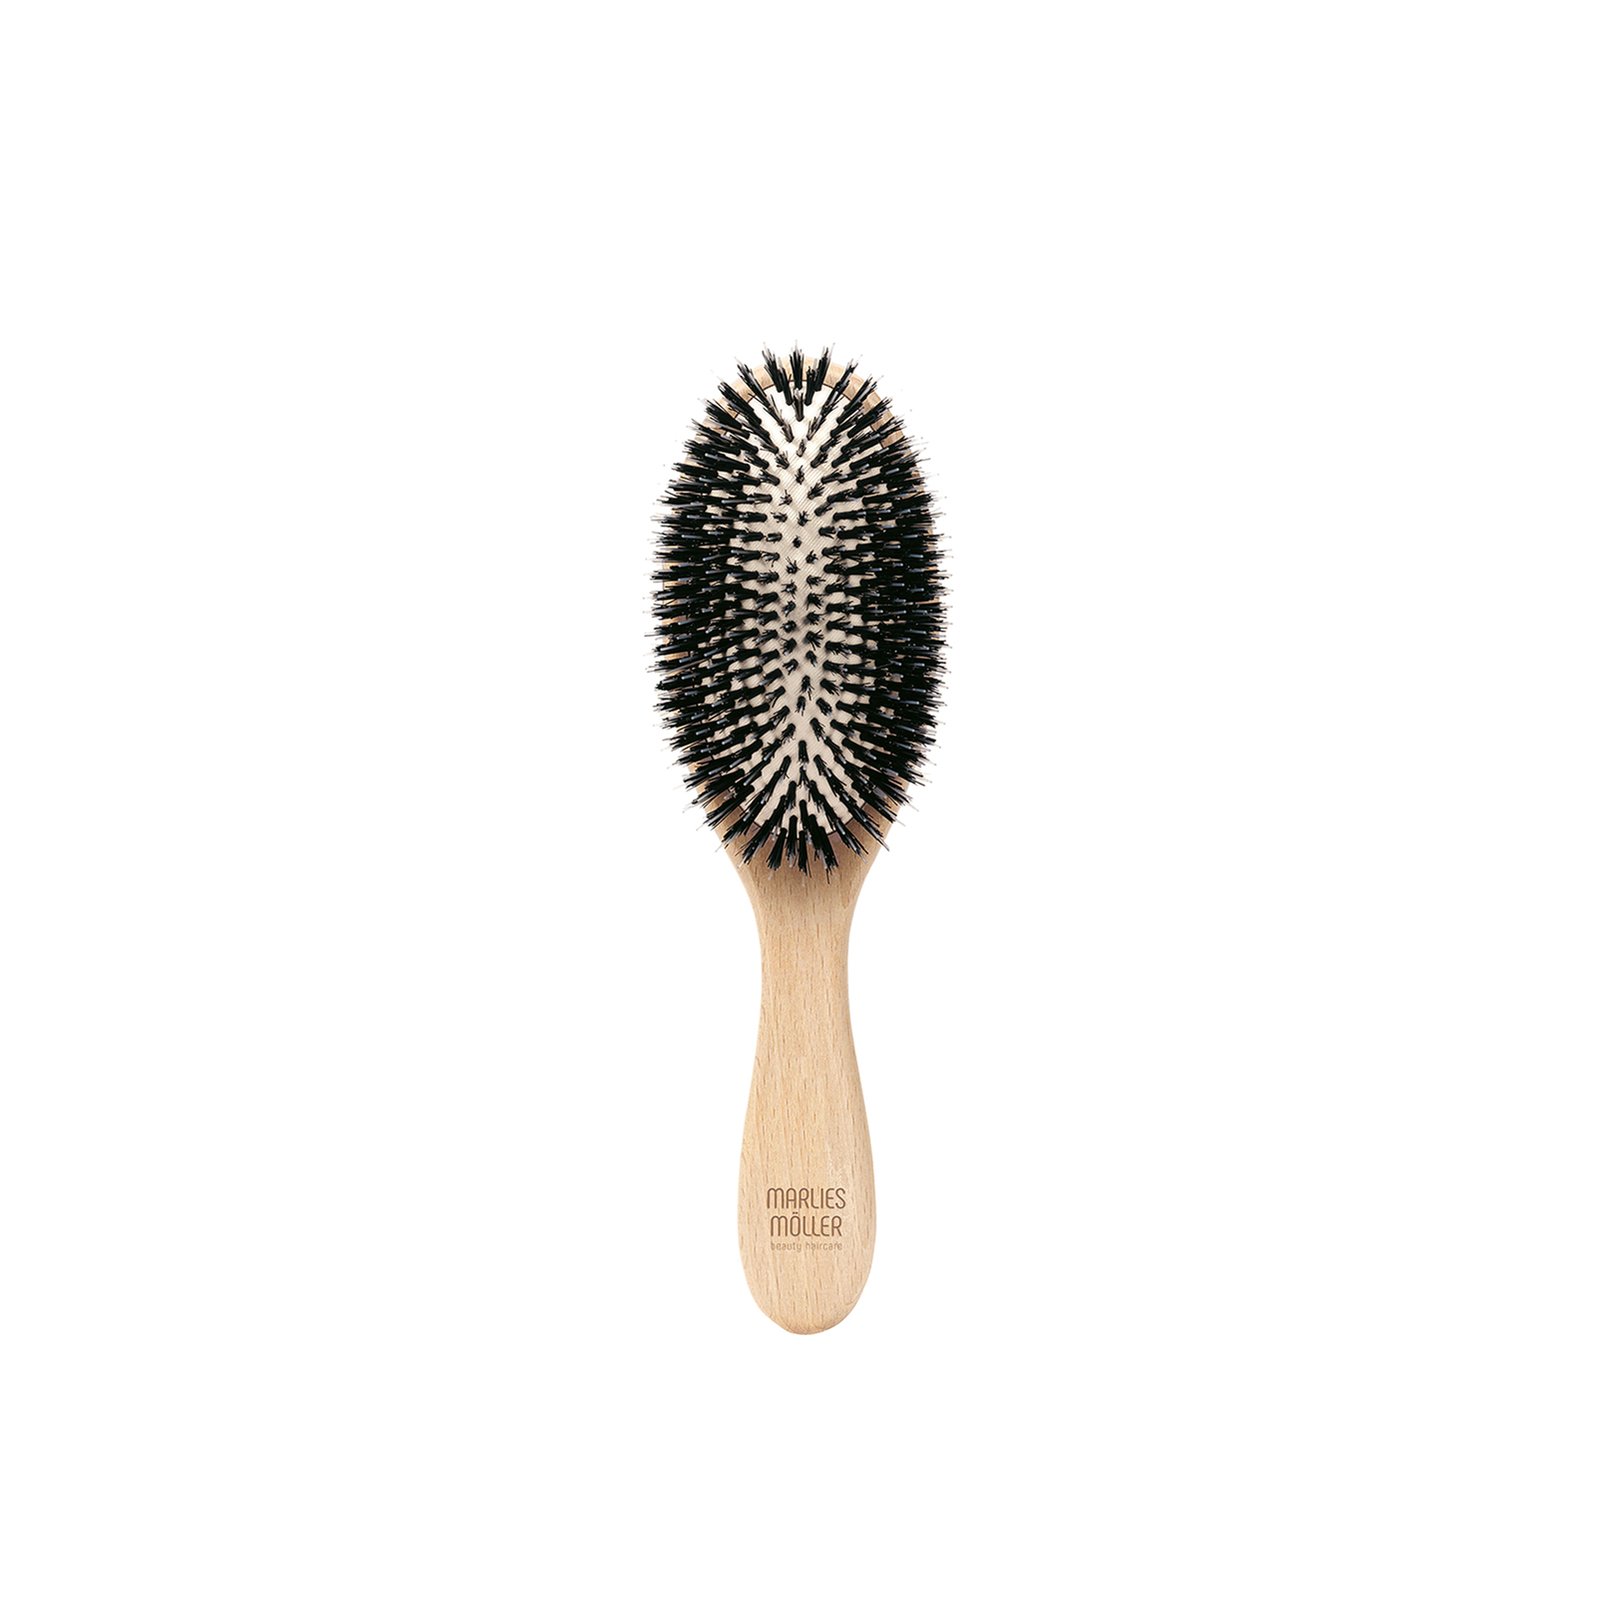 Marlies Möller Professional Brush Allround Hair Brush